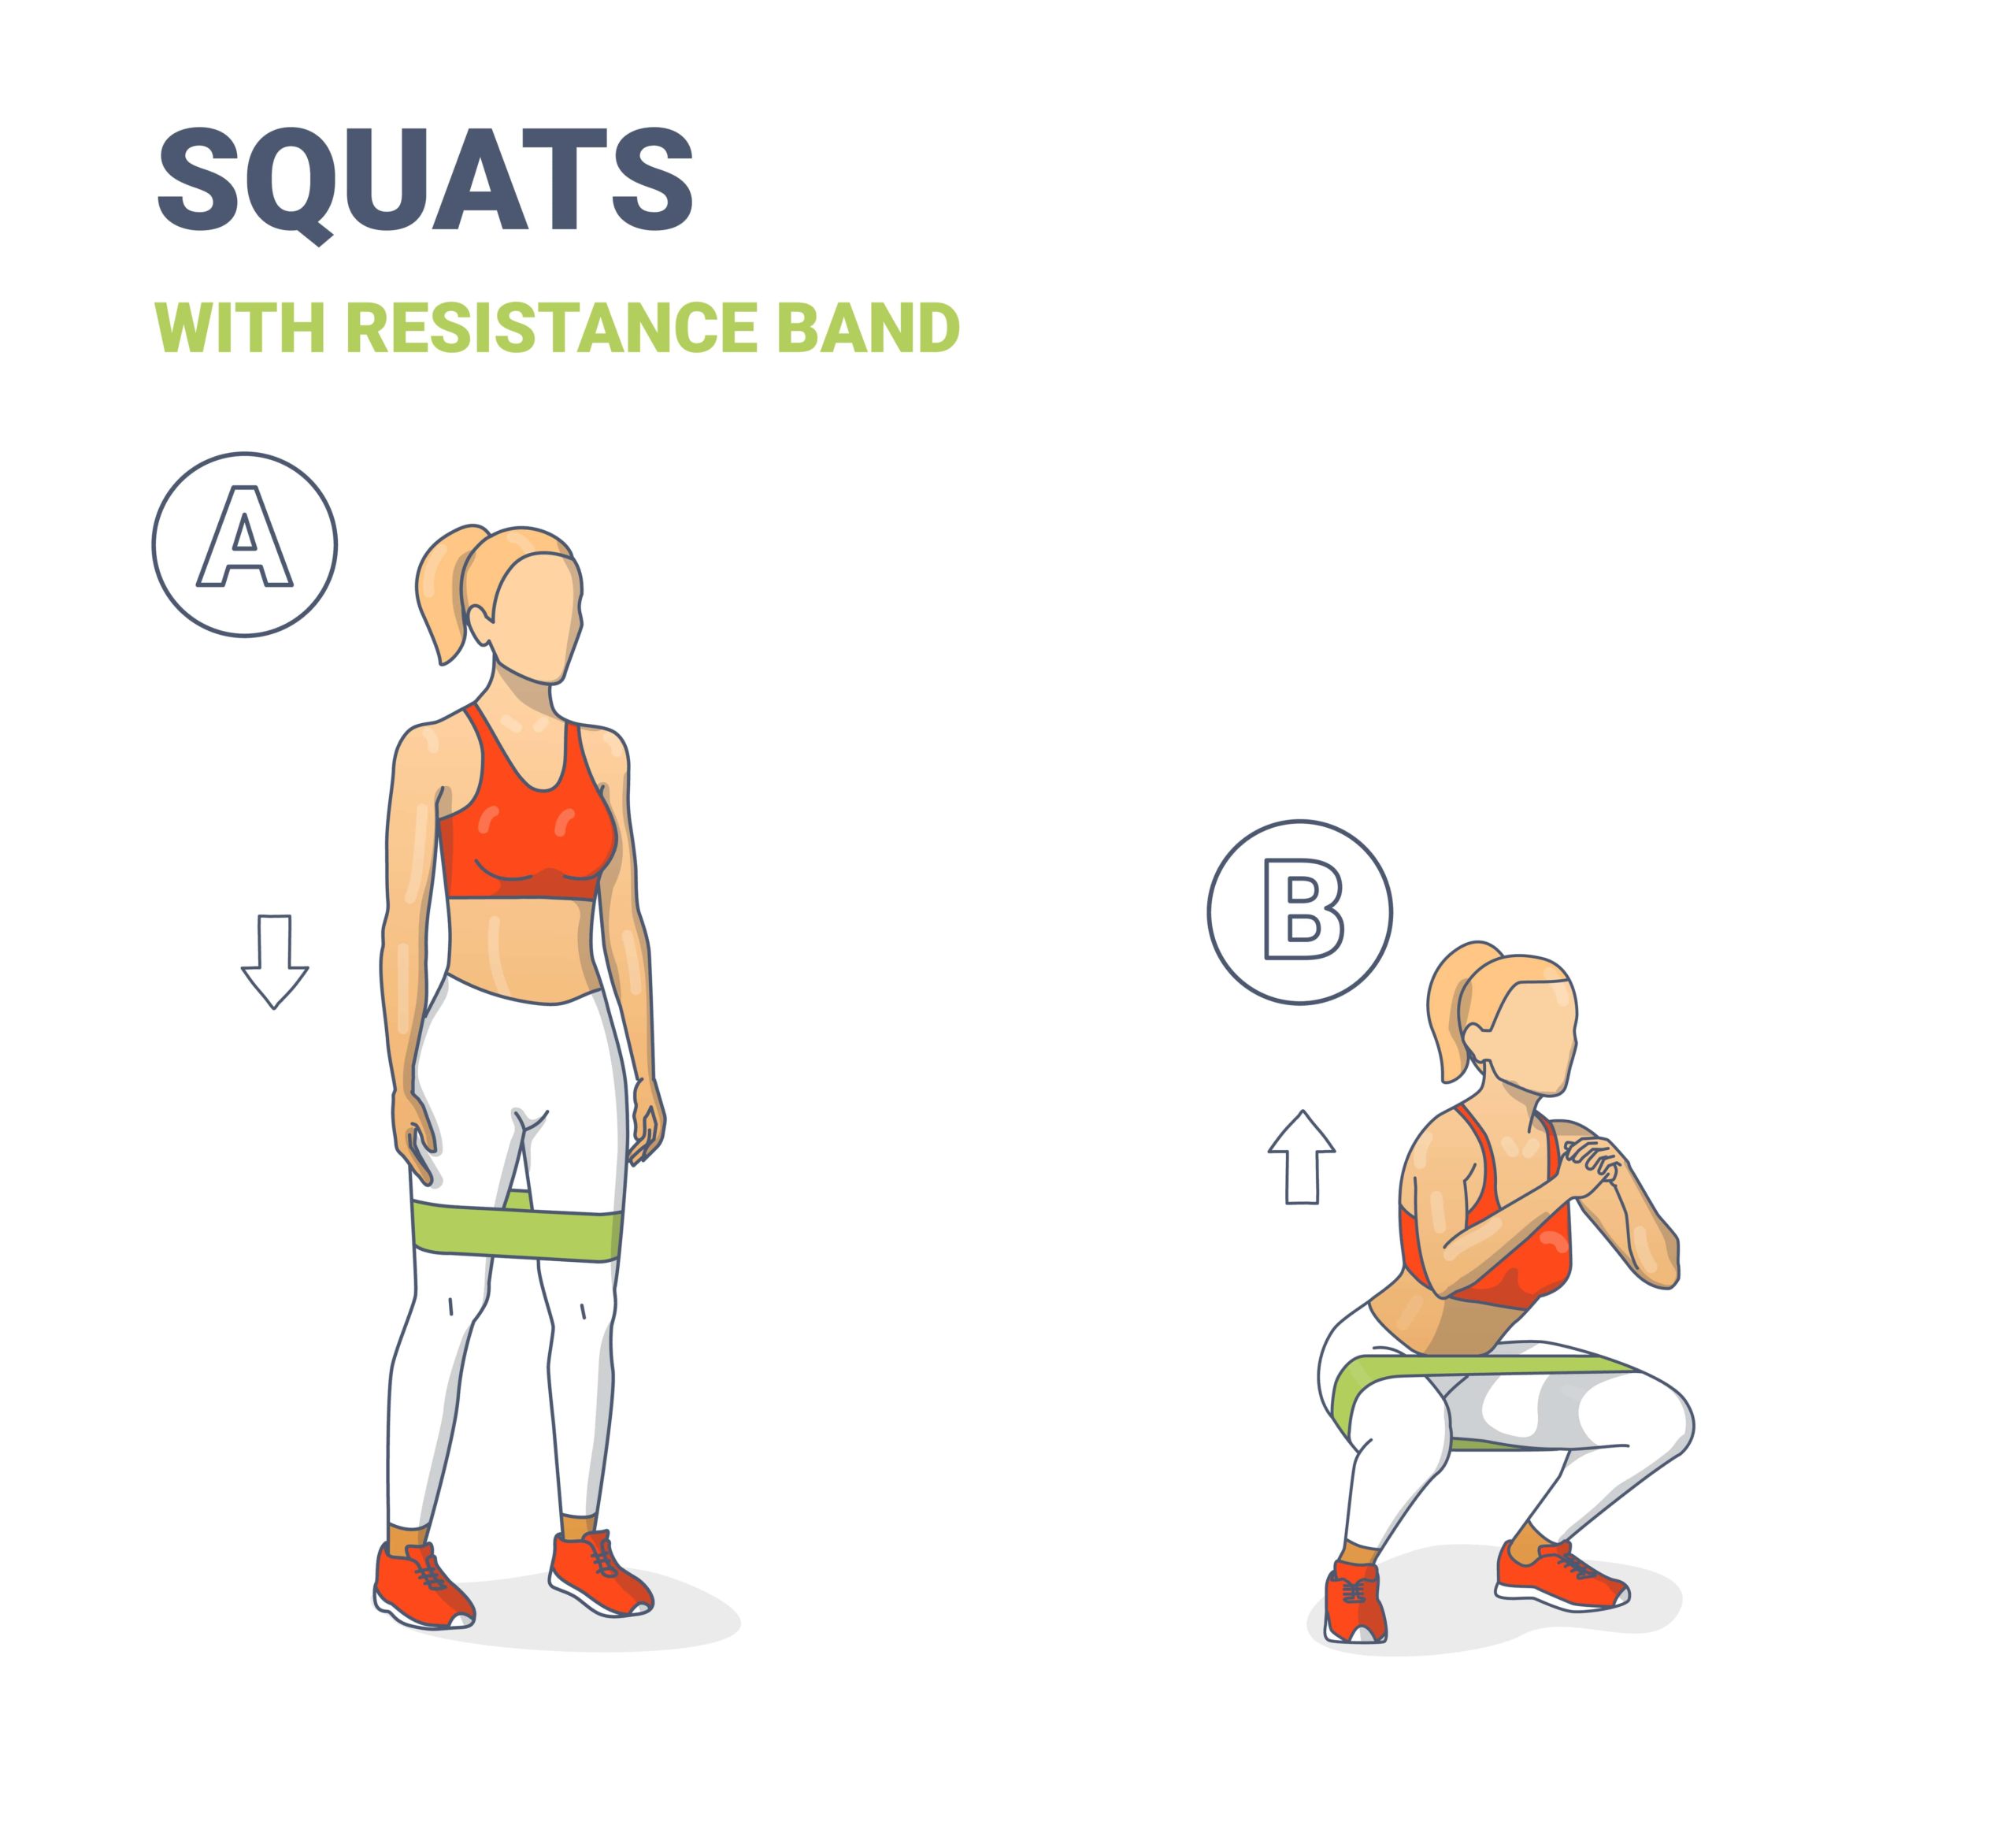 Exercice n°1 : Les squats